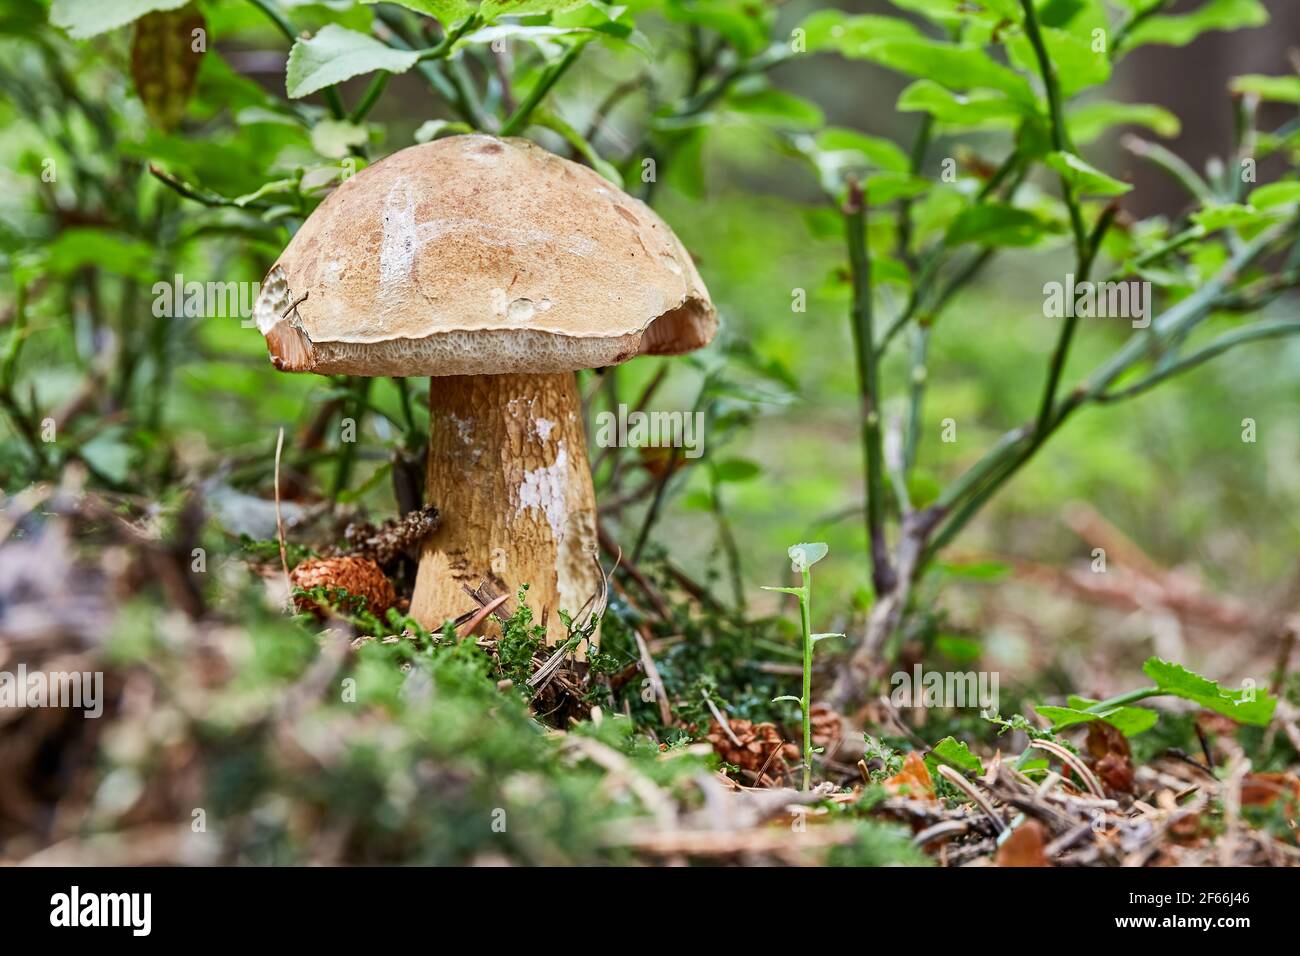 Tylopilus felleus - inedible mushroom. Fungus in the natural environment. English: bitter bolete, bitter tylopilus Stock Photo